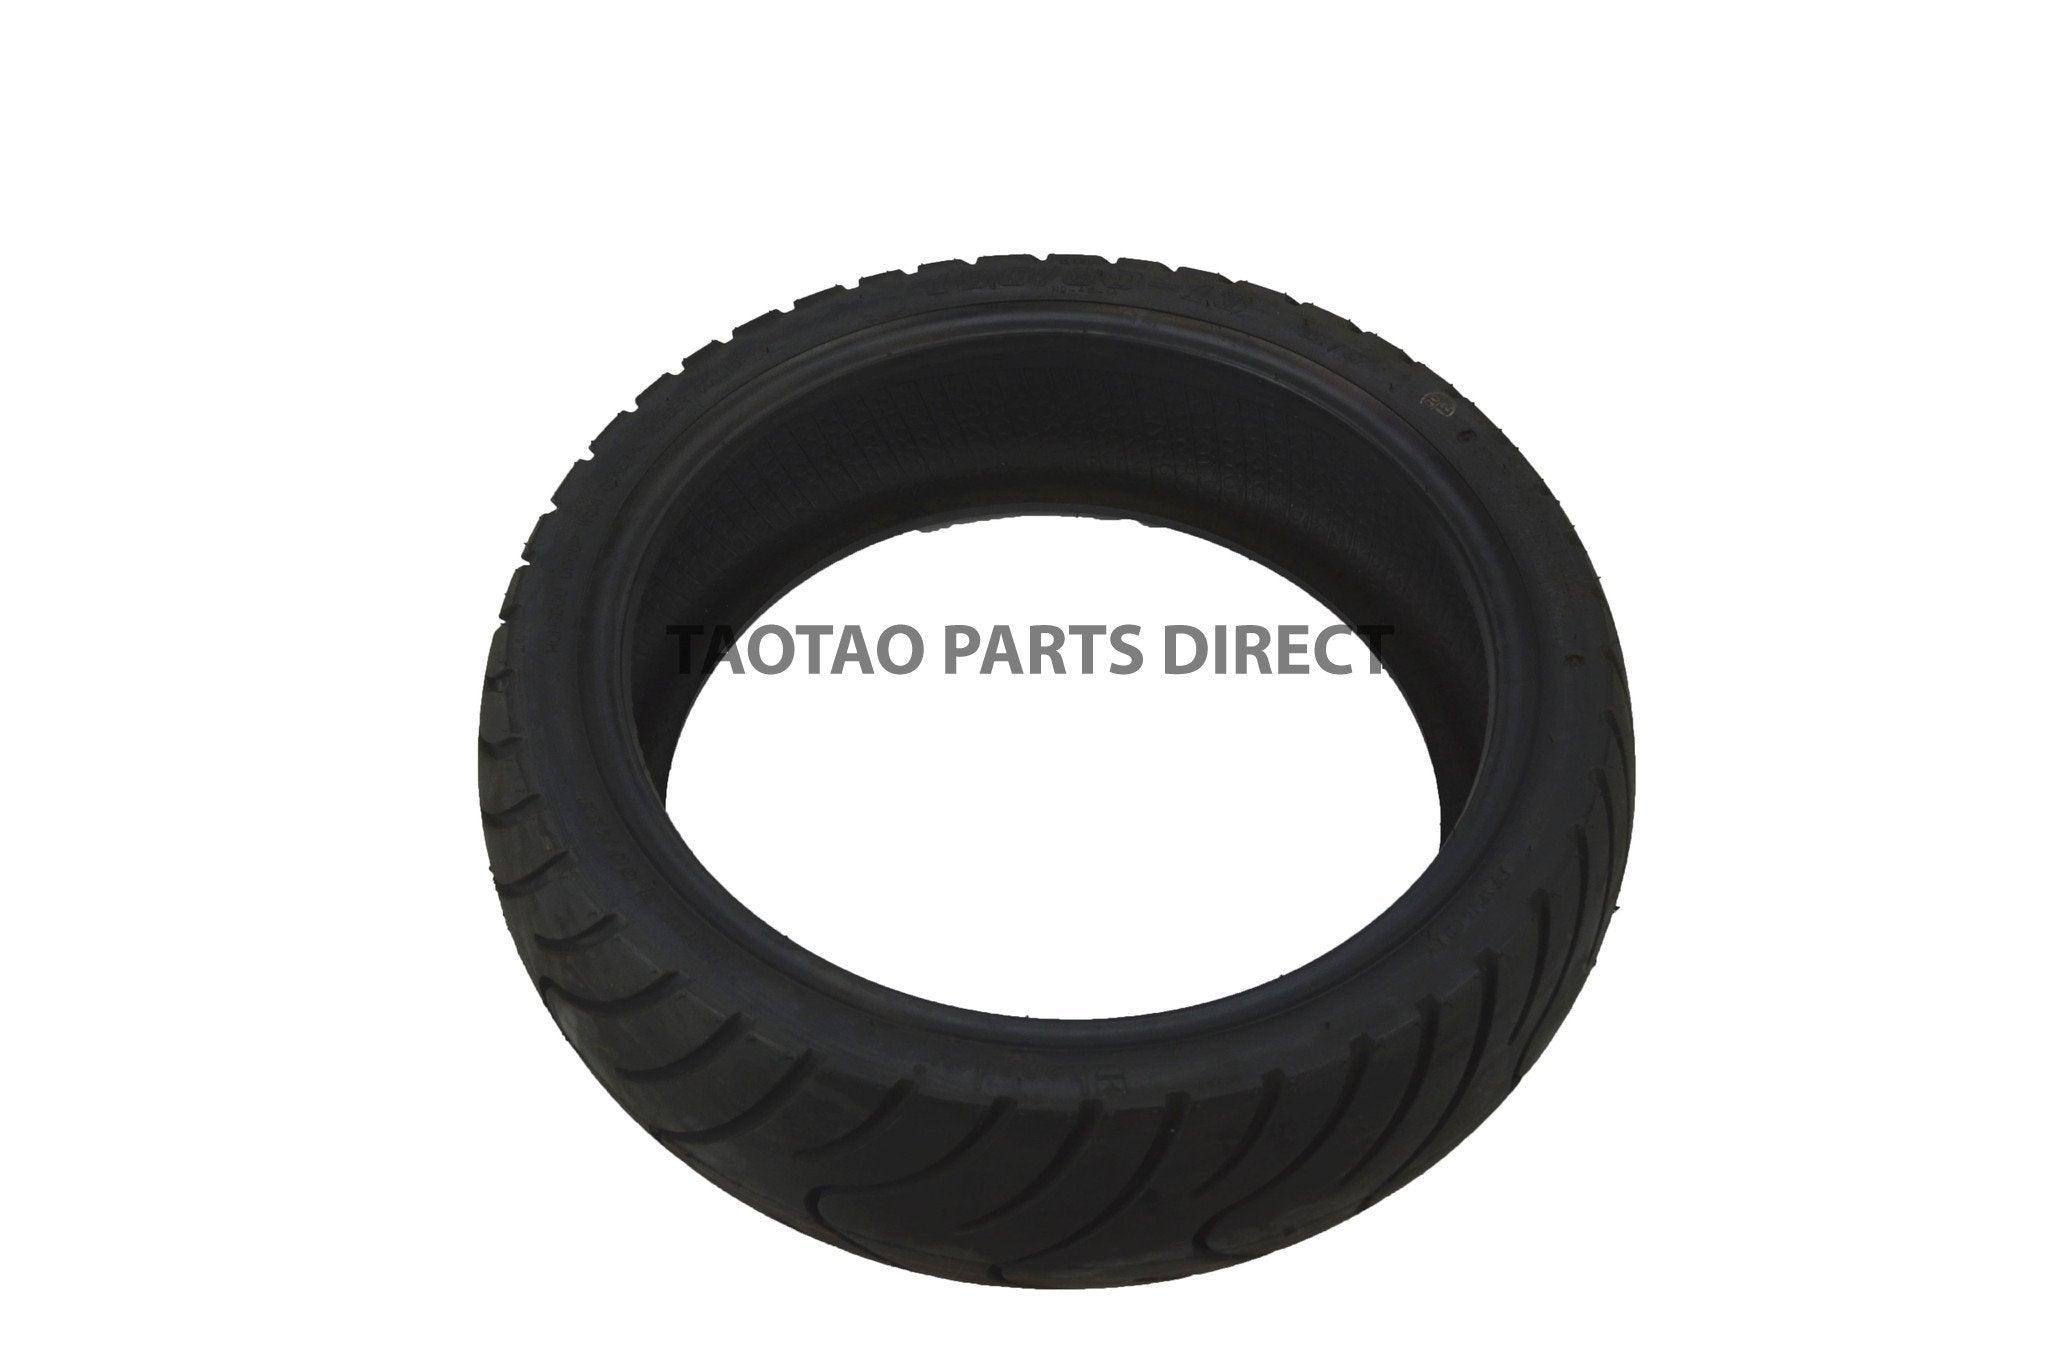 130x60-13 Tire - TaoTaoPartsDirect.com